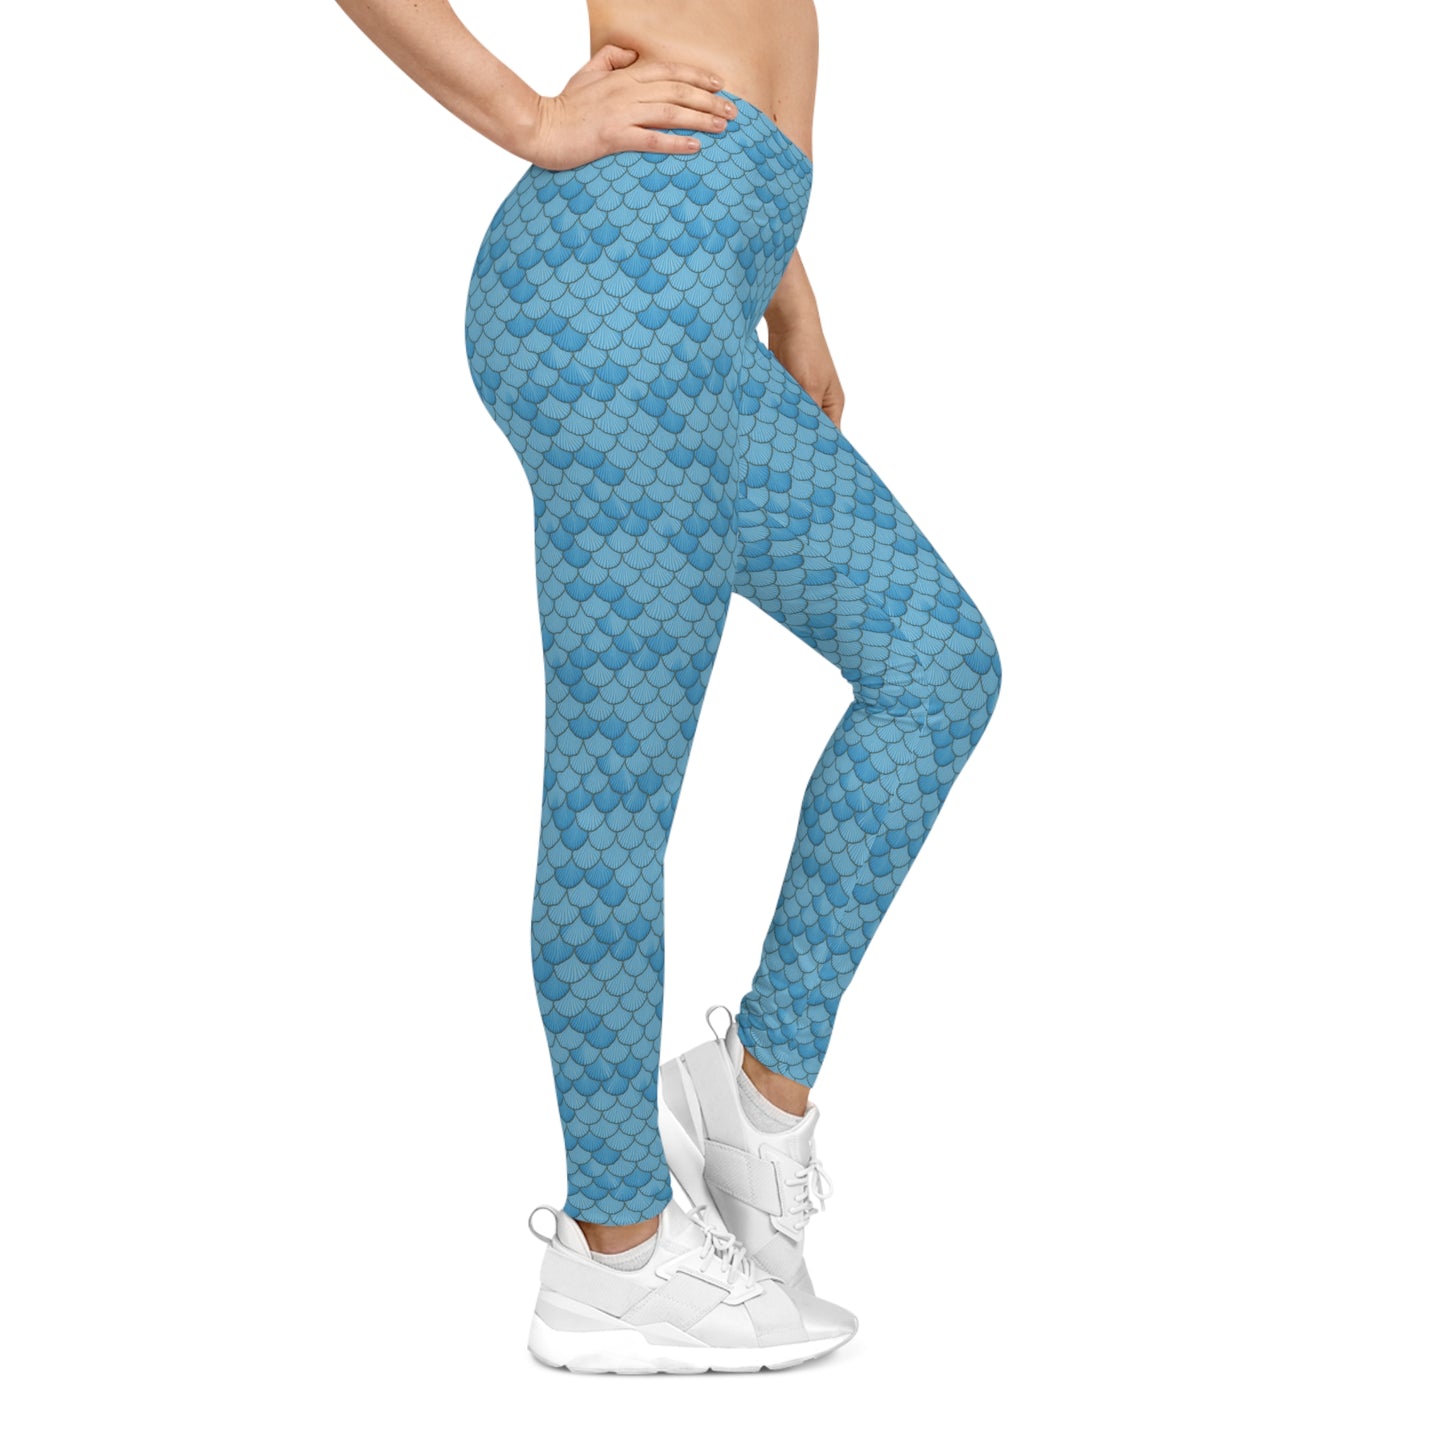 Low Waist Blue Seashell Mermaid Design - Women's Casual Leggings - Smooth & Comfortable, Gym Gear, Workout, Yoga, Stylish, Ocean Lover